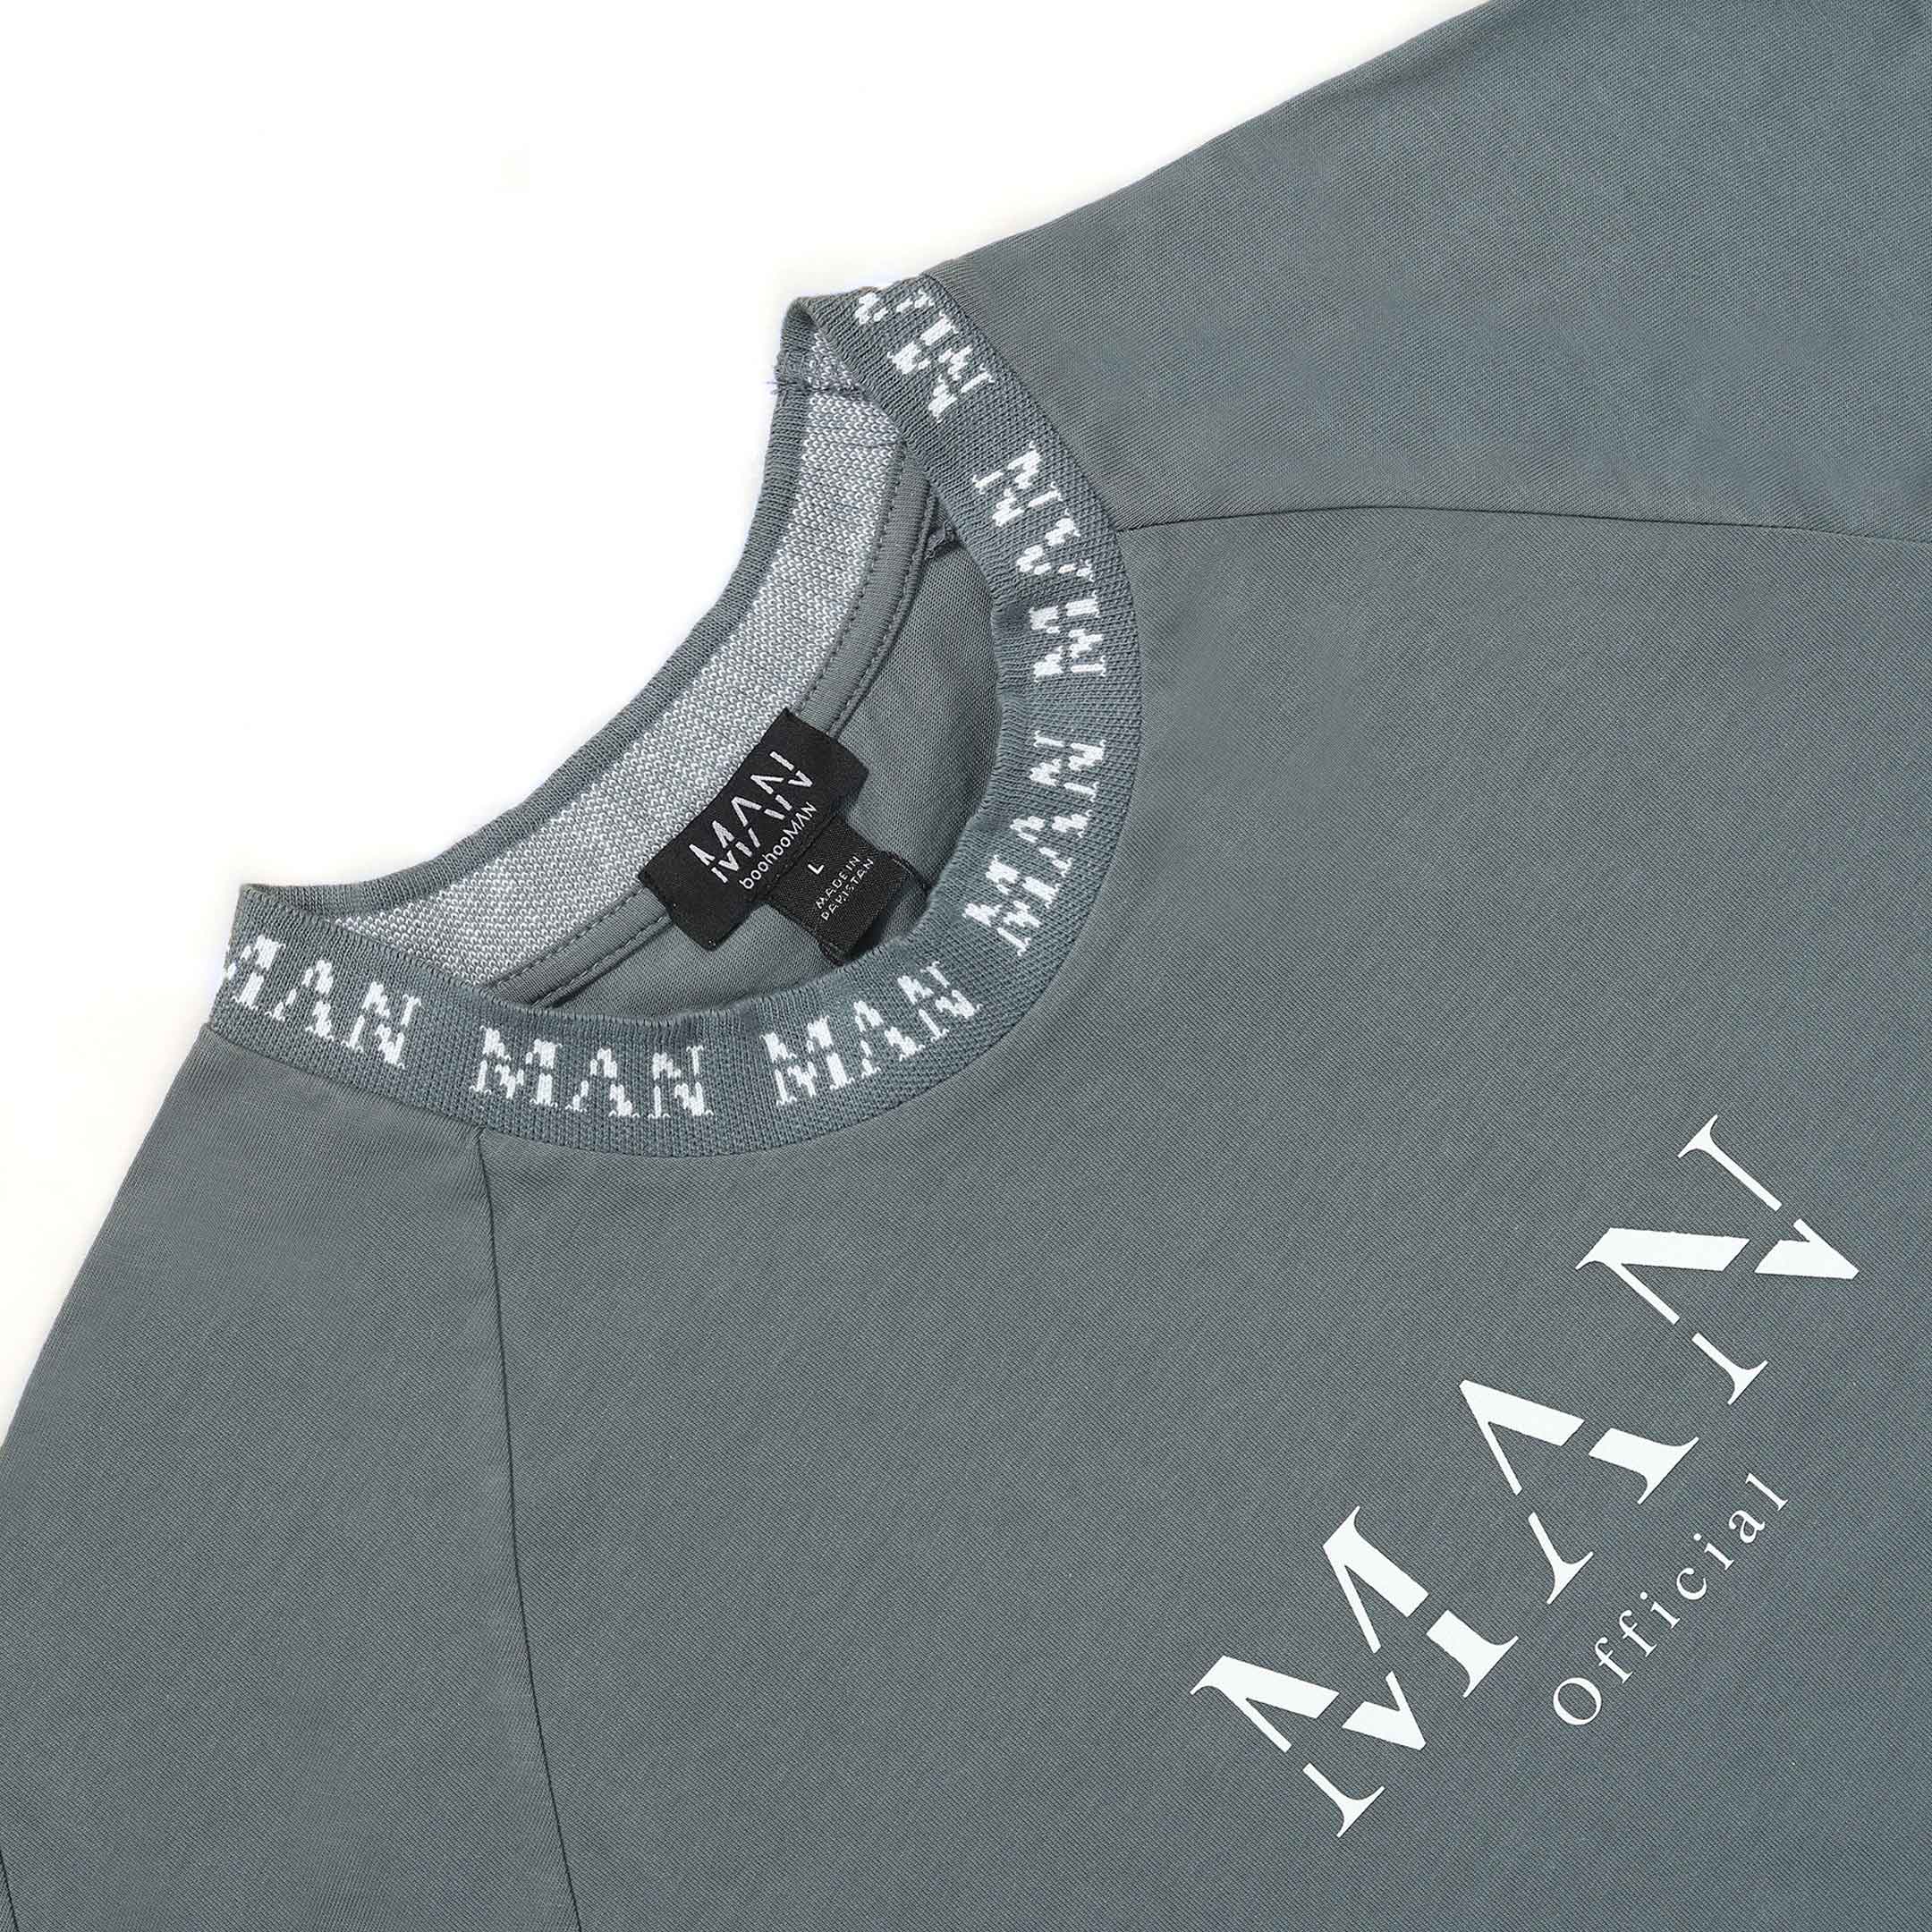 Boohoo Man T-Shirt Slate Blue Printed Logo (MAN OFFICAL)